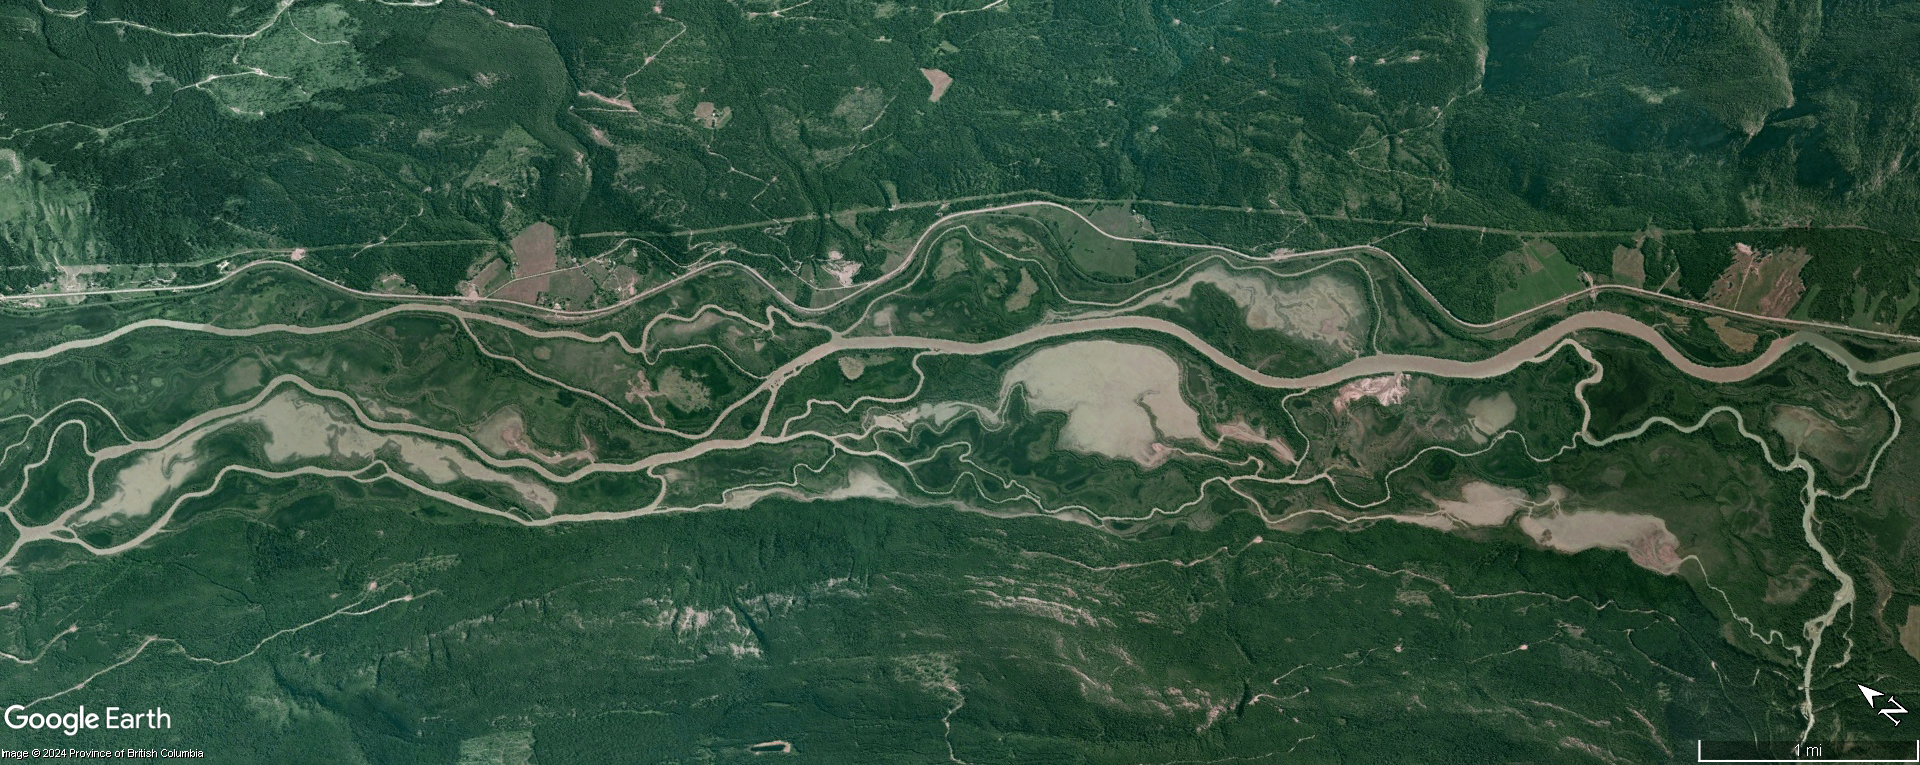 Colombia River - Anastomosed.jpg